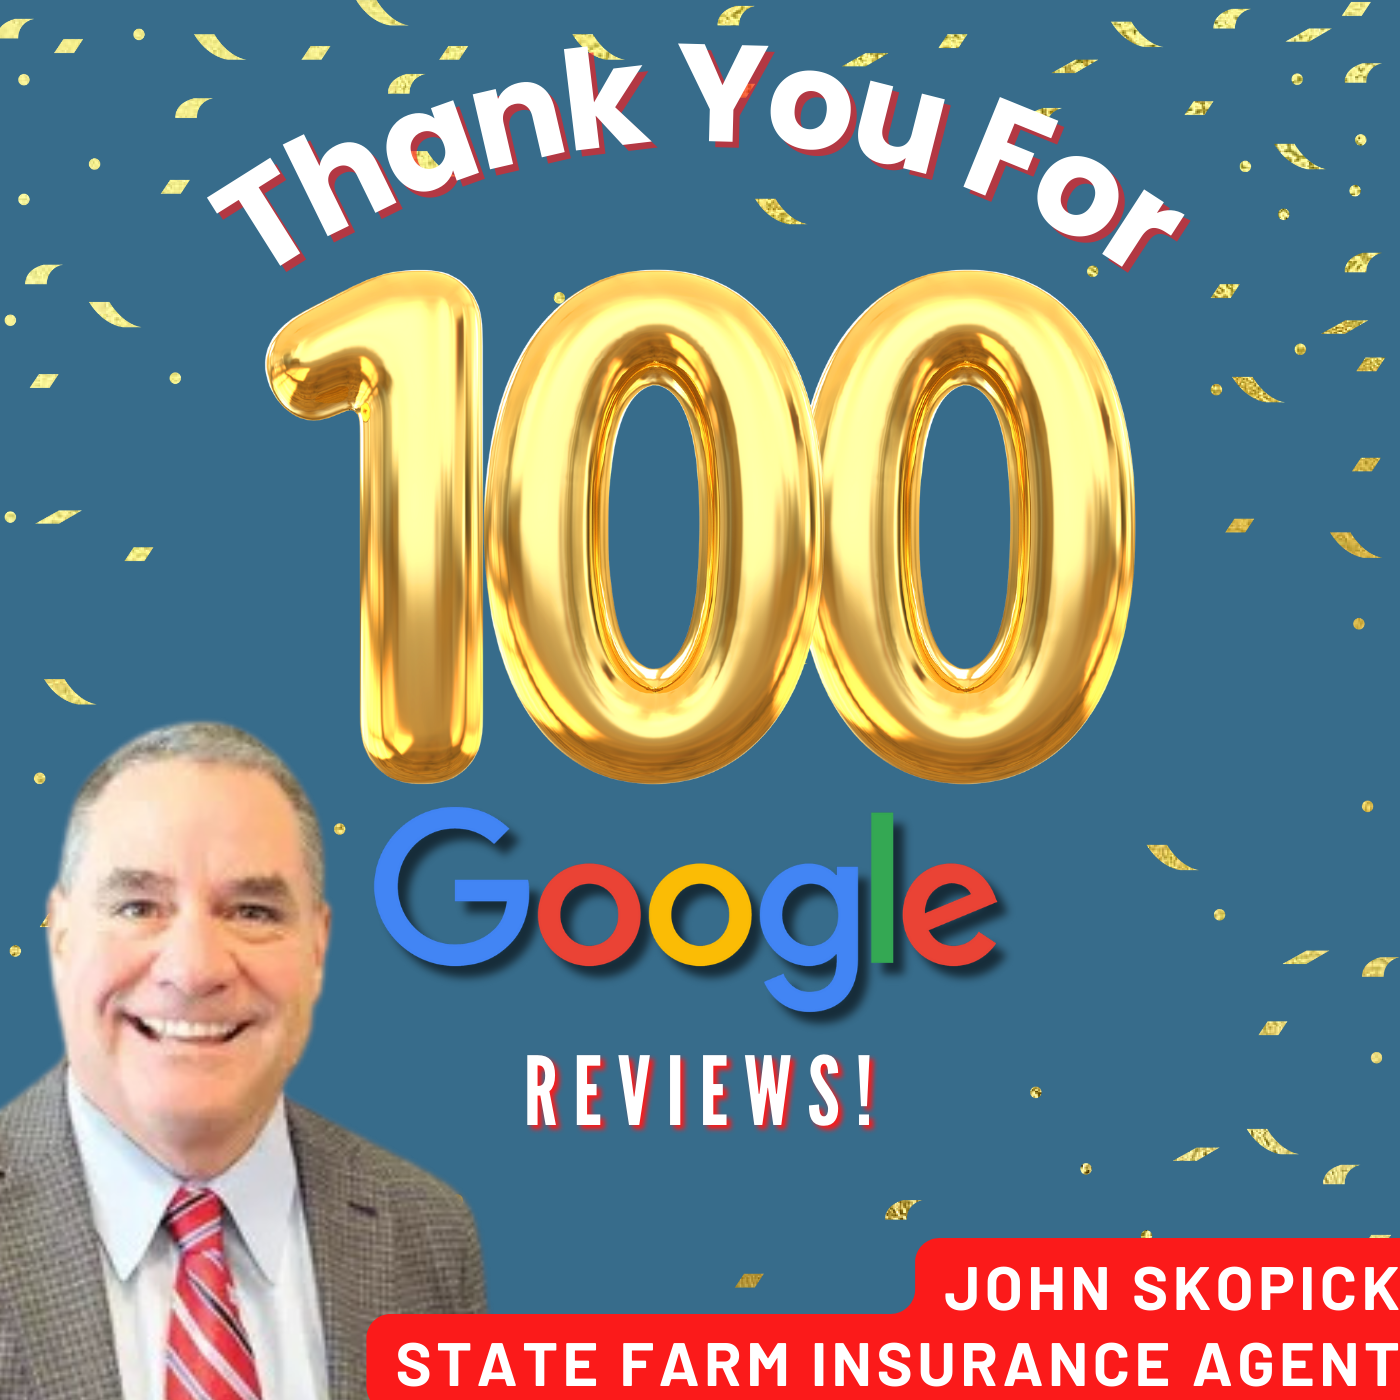 John Skopick - State Farm Insurance Reviews